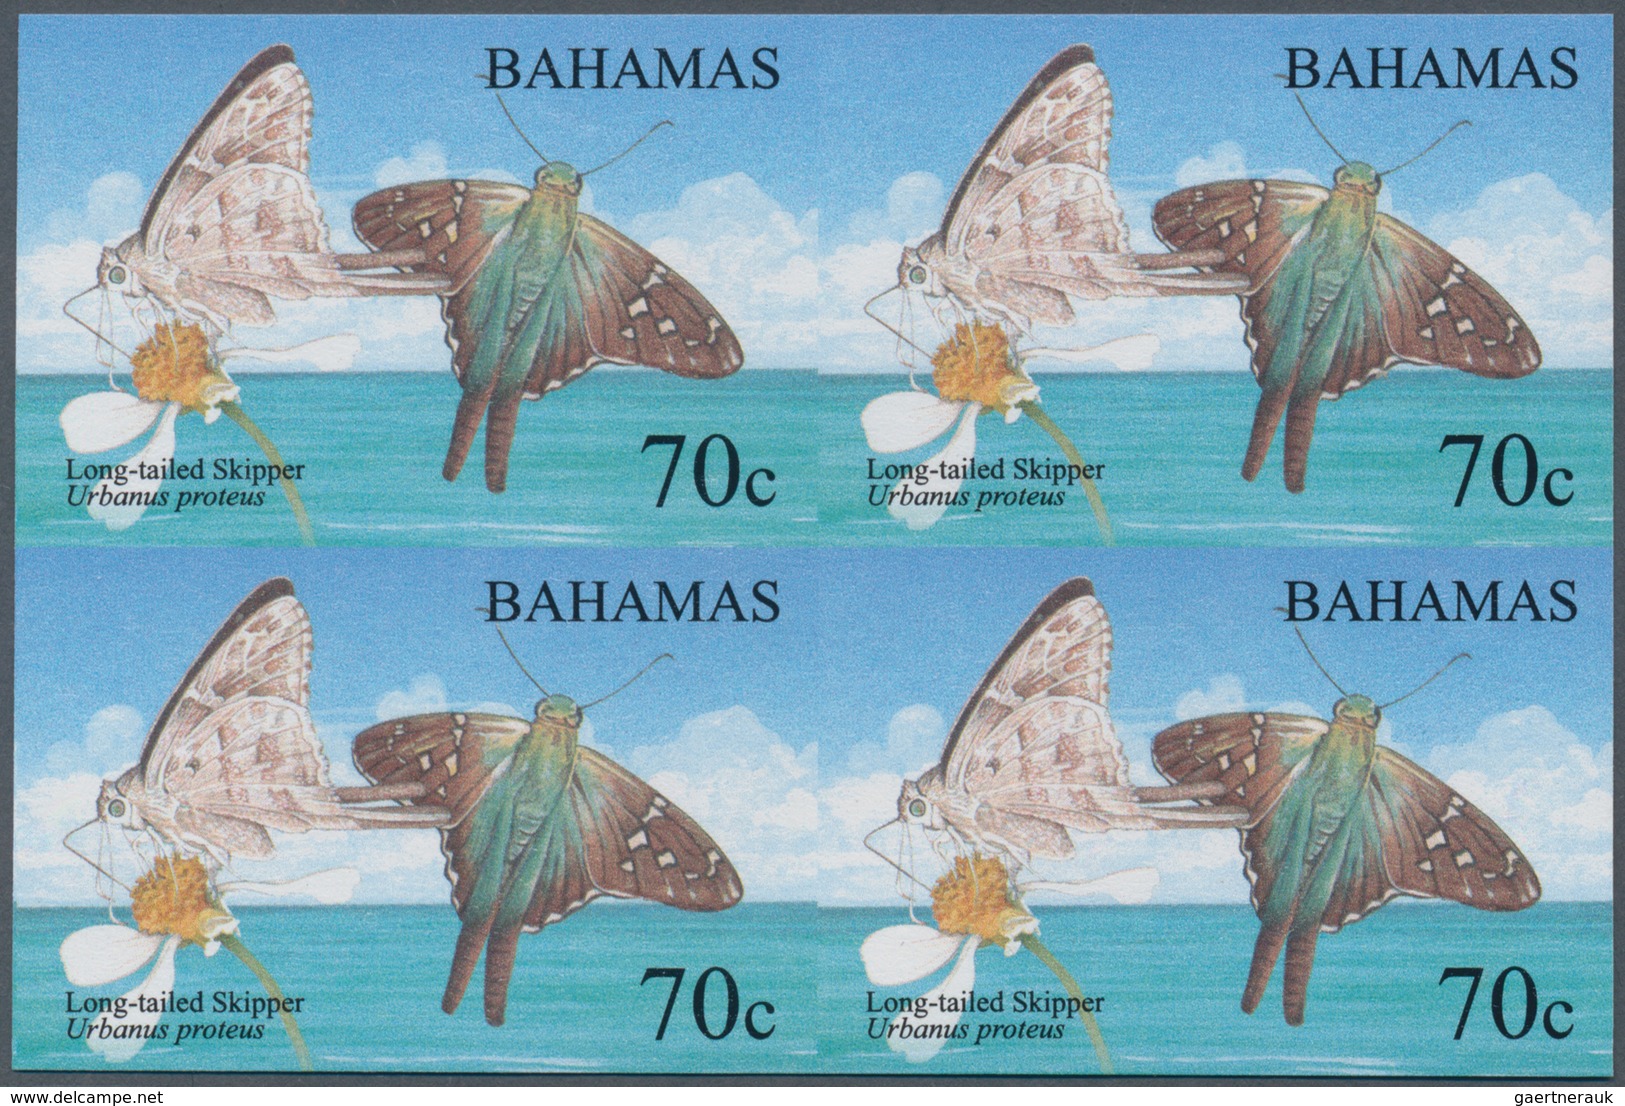 Thematik: Tiere-Schmetterlinge / Animals-butterflies: 2008, Bahamas. IMPERFORATE Block Of 4 For The - Butterflies